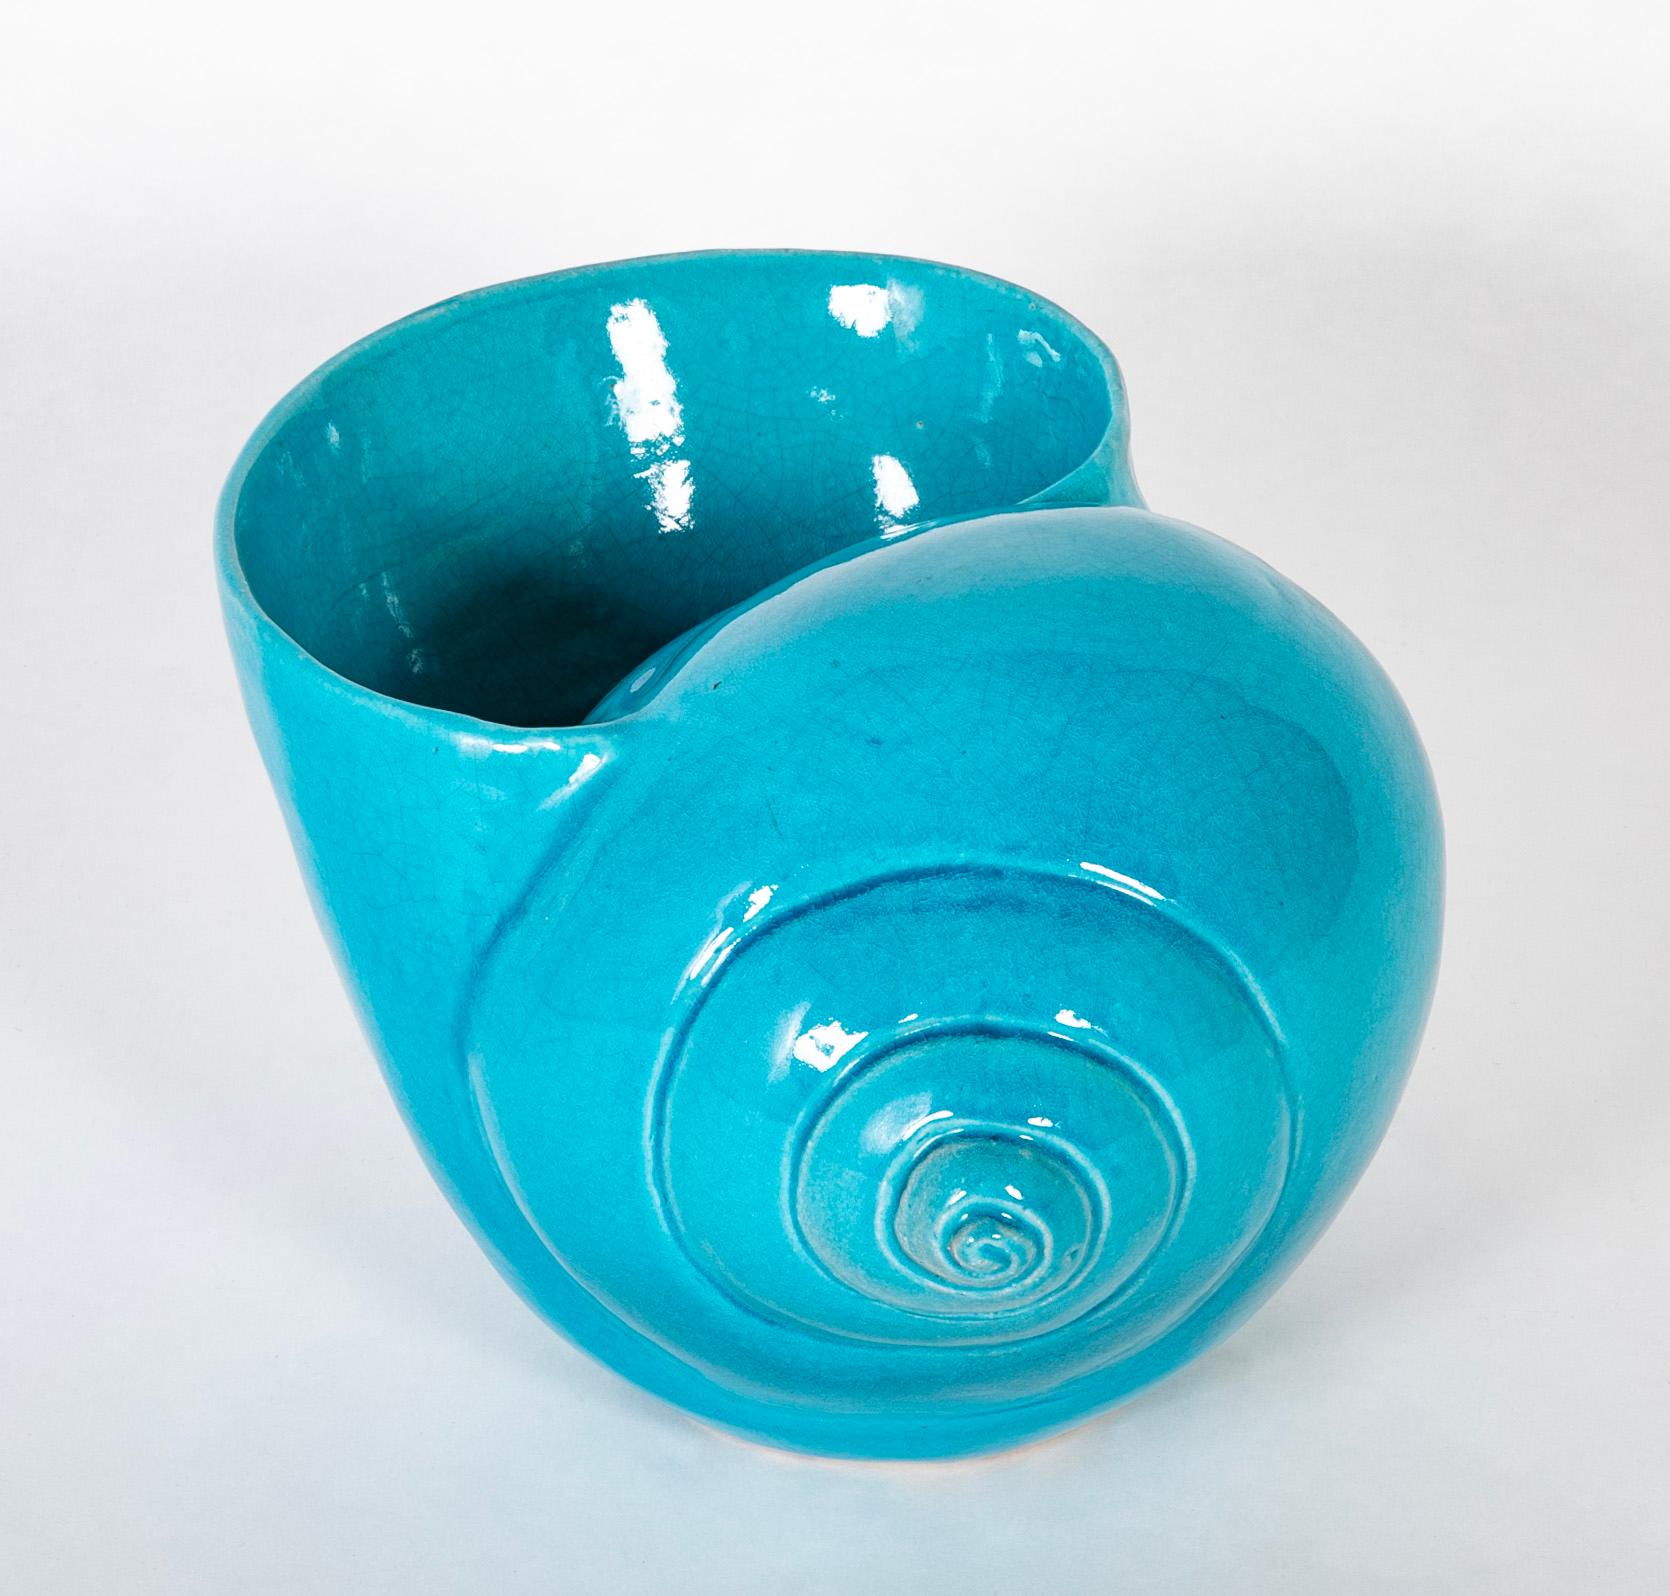 Ceramic Turquoise Blue Glazed Sea Shell Vase Jardiniere Planter, Large Scale For Sale